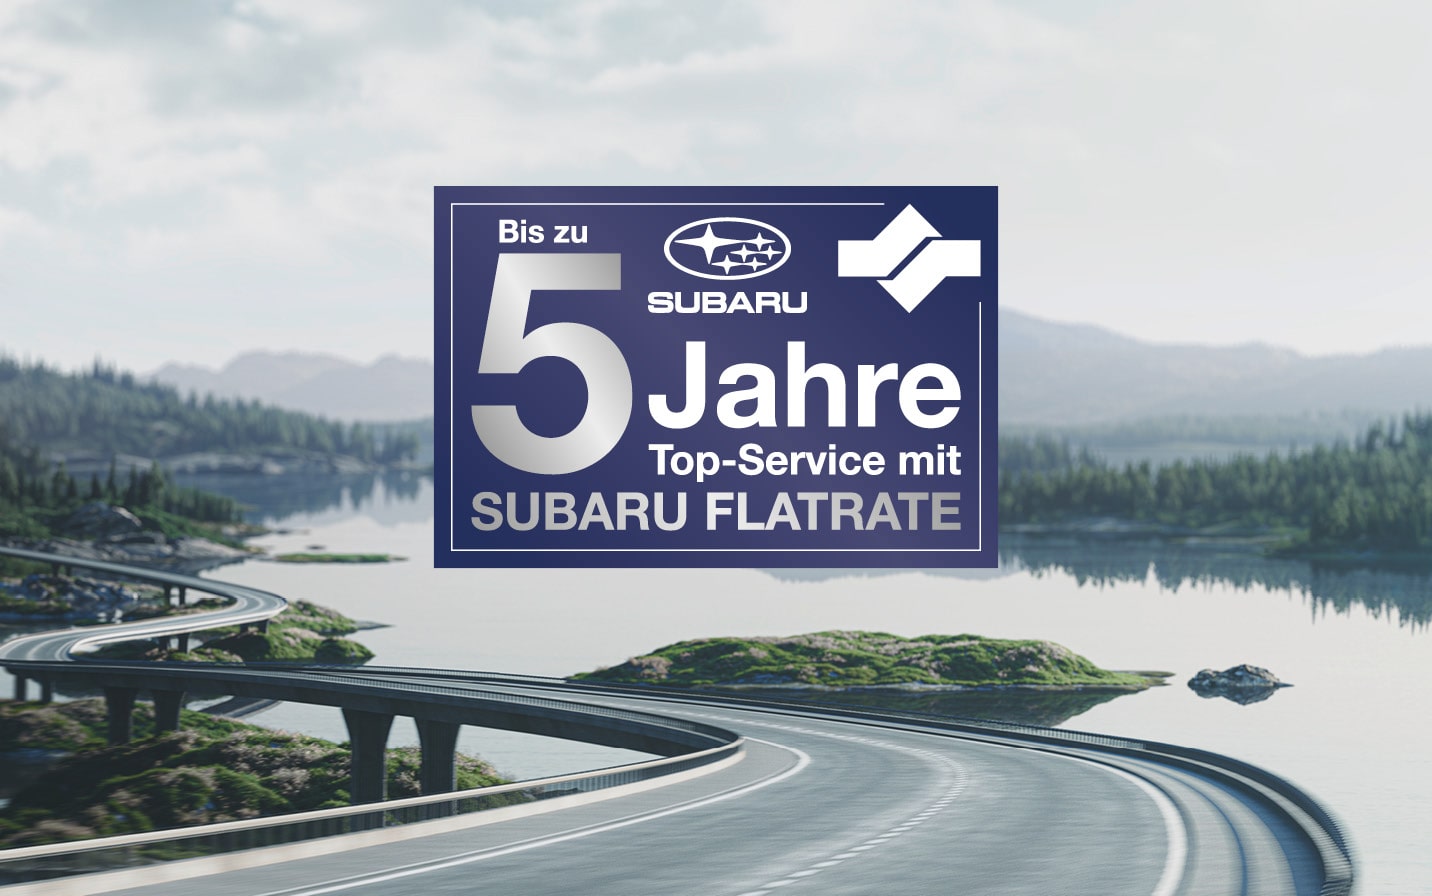 5 Jahre Top-Service mit Subaru Flatrate